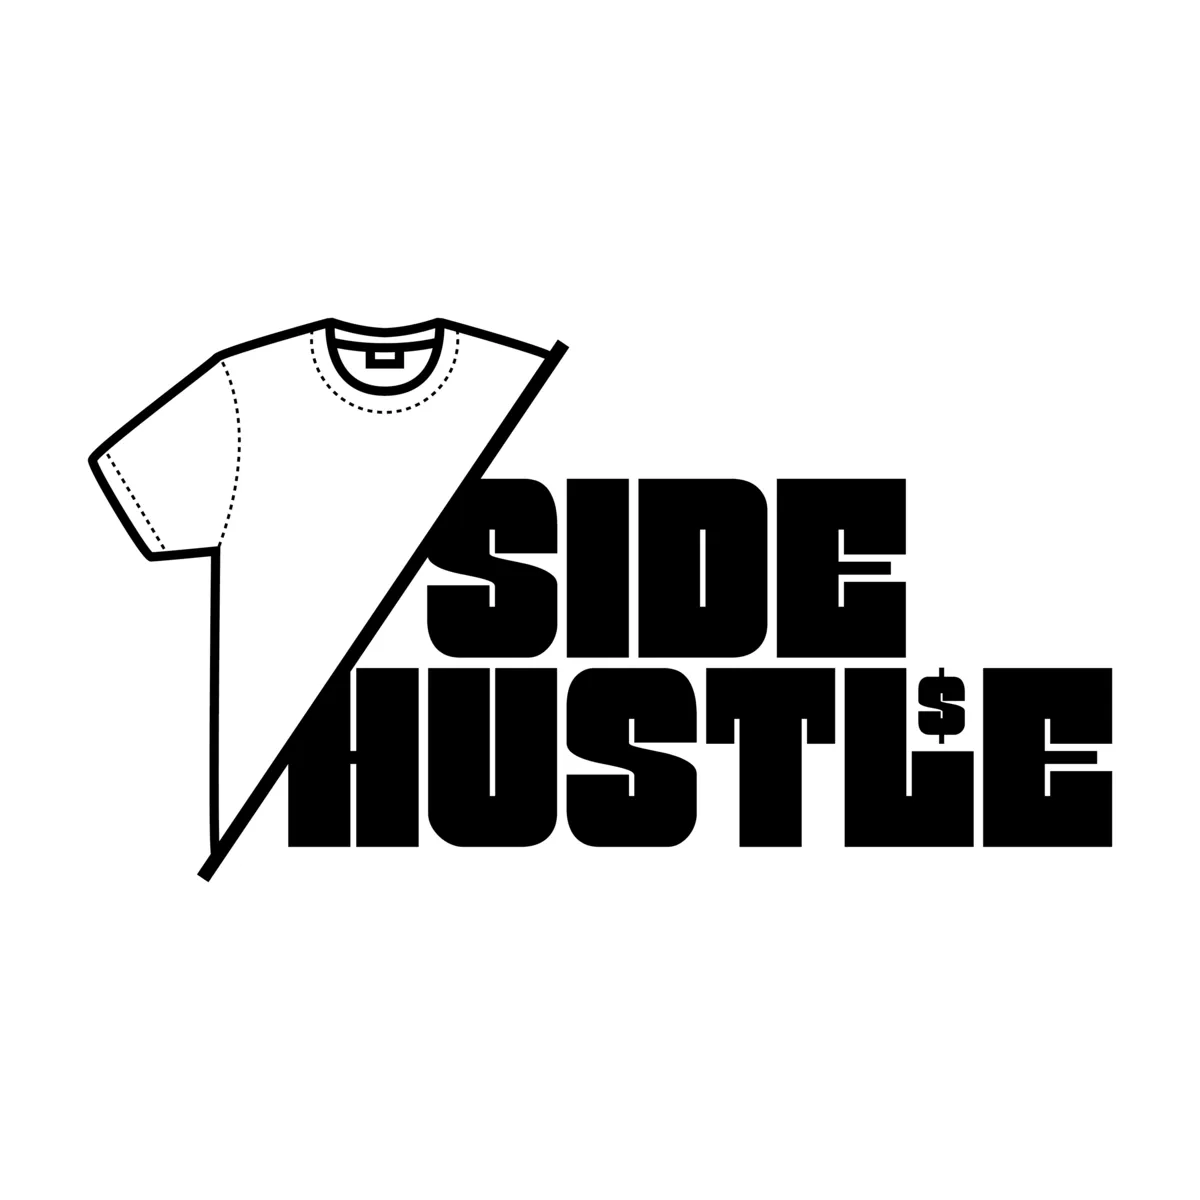 T-Shirt Side Hustle